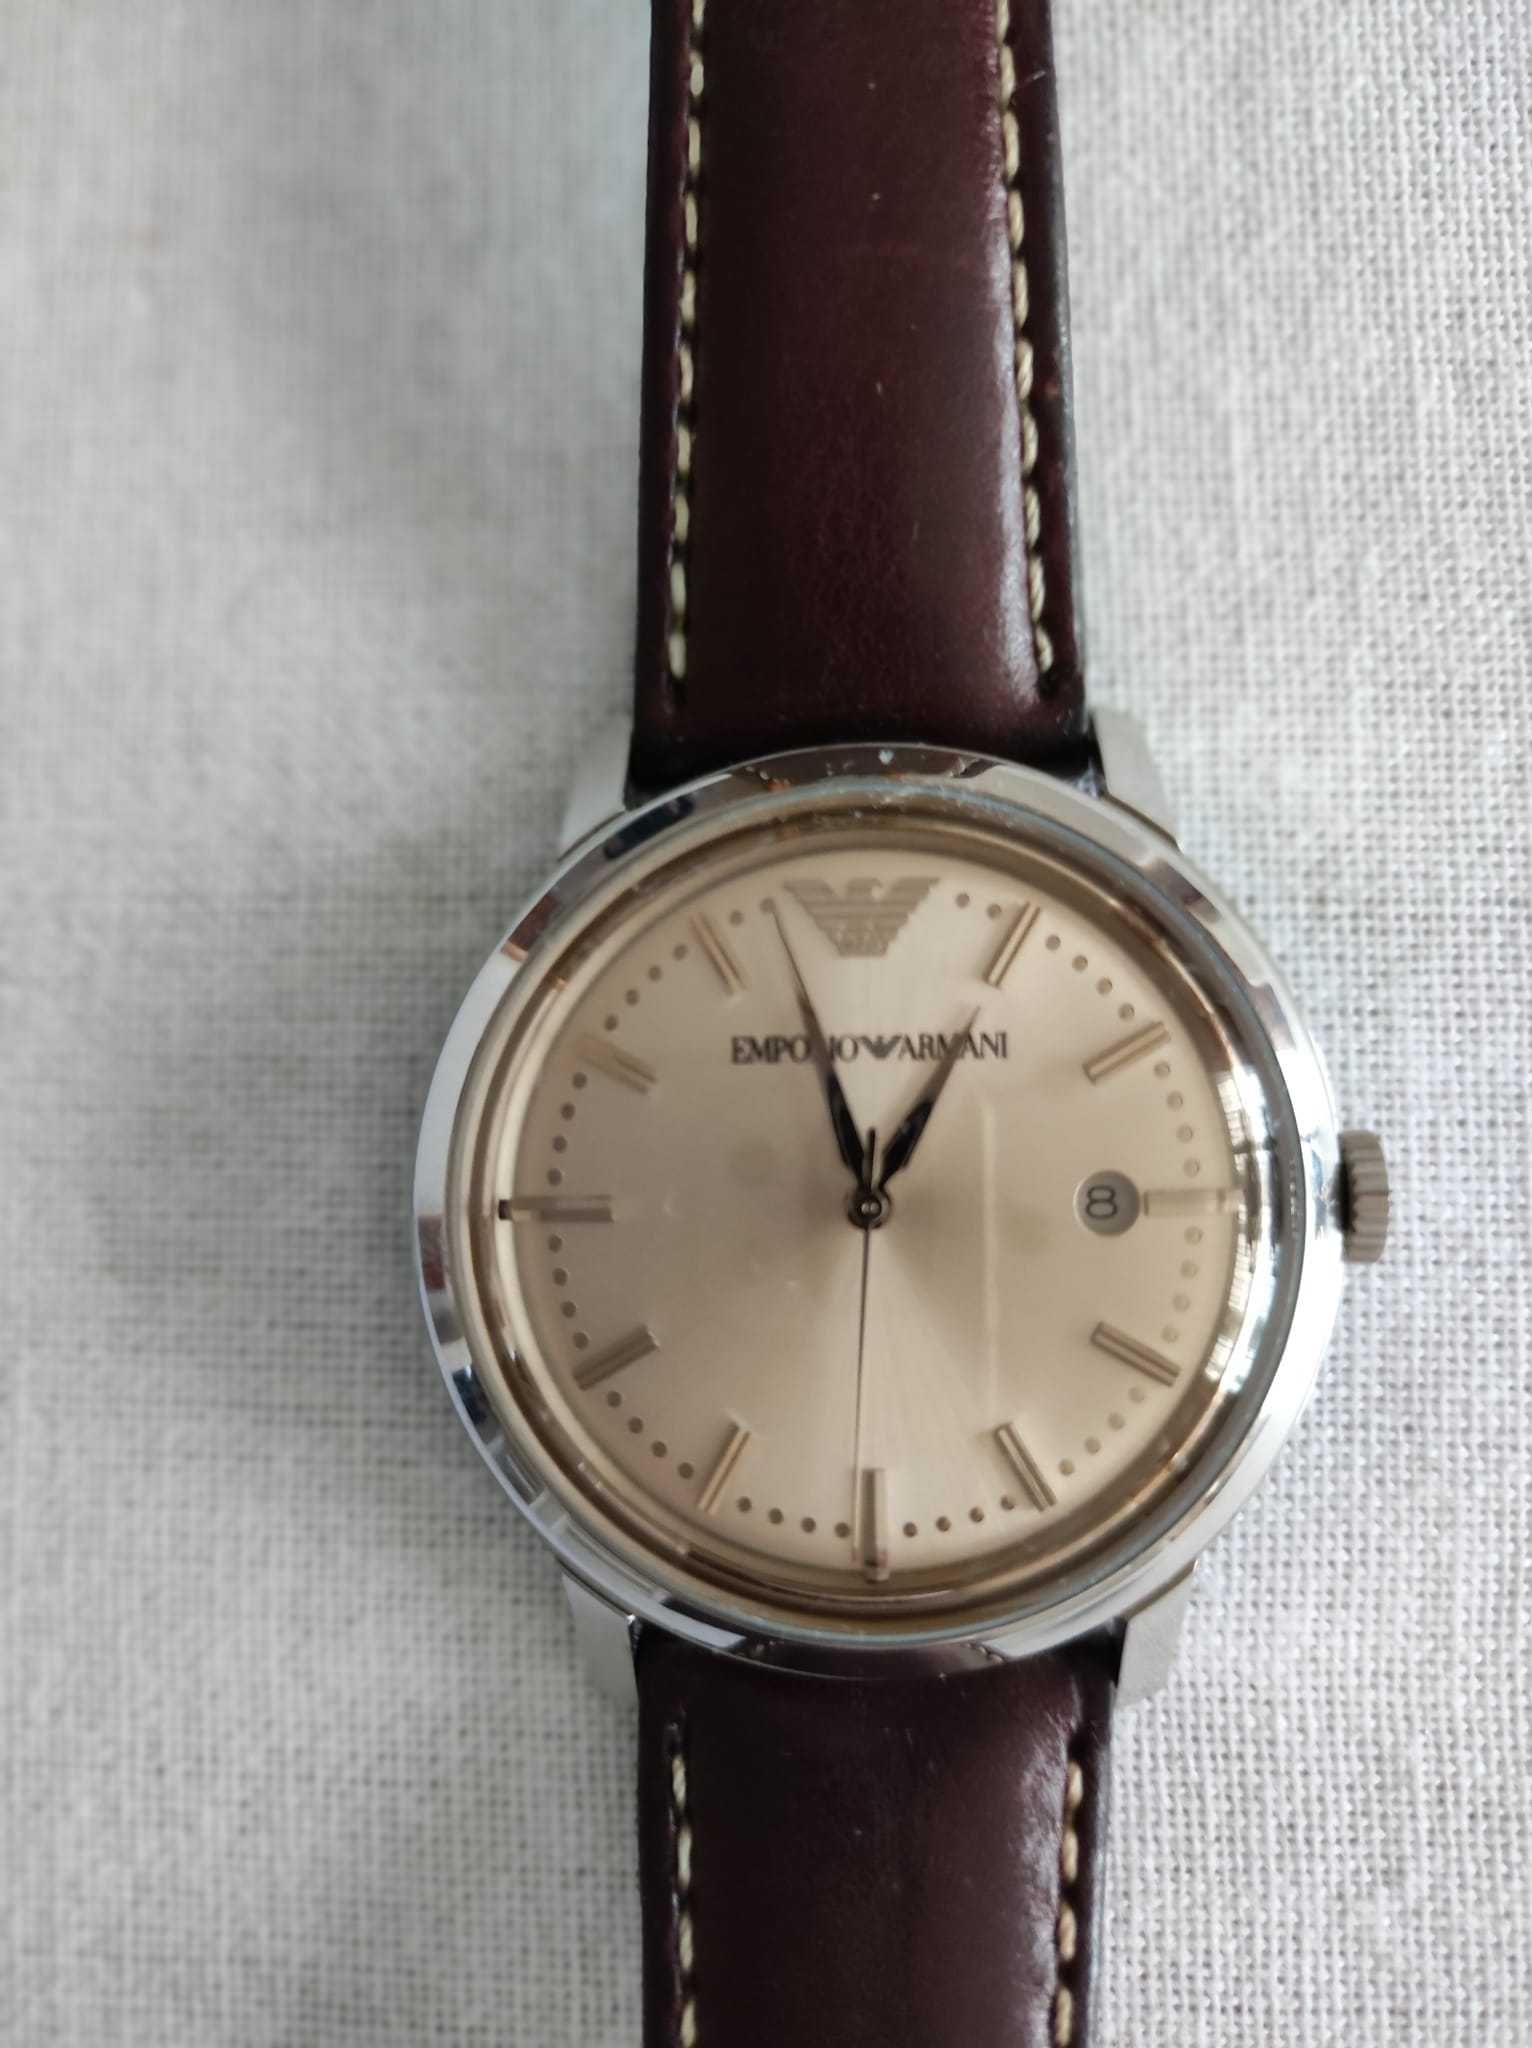 Piękny, klasyczny, zegarek męski Emporio Armani ARO573 z certyfikatem